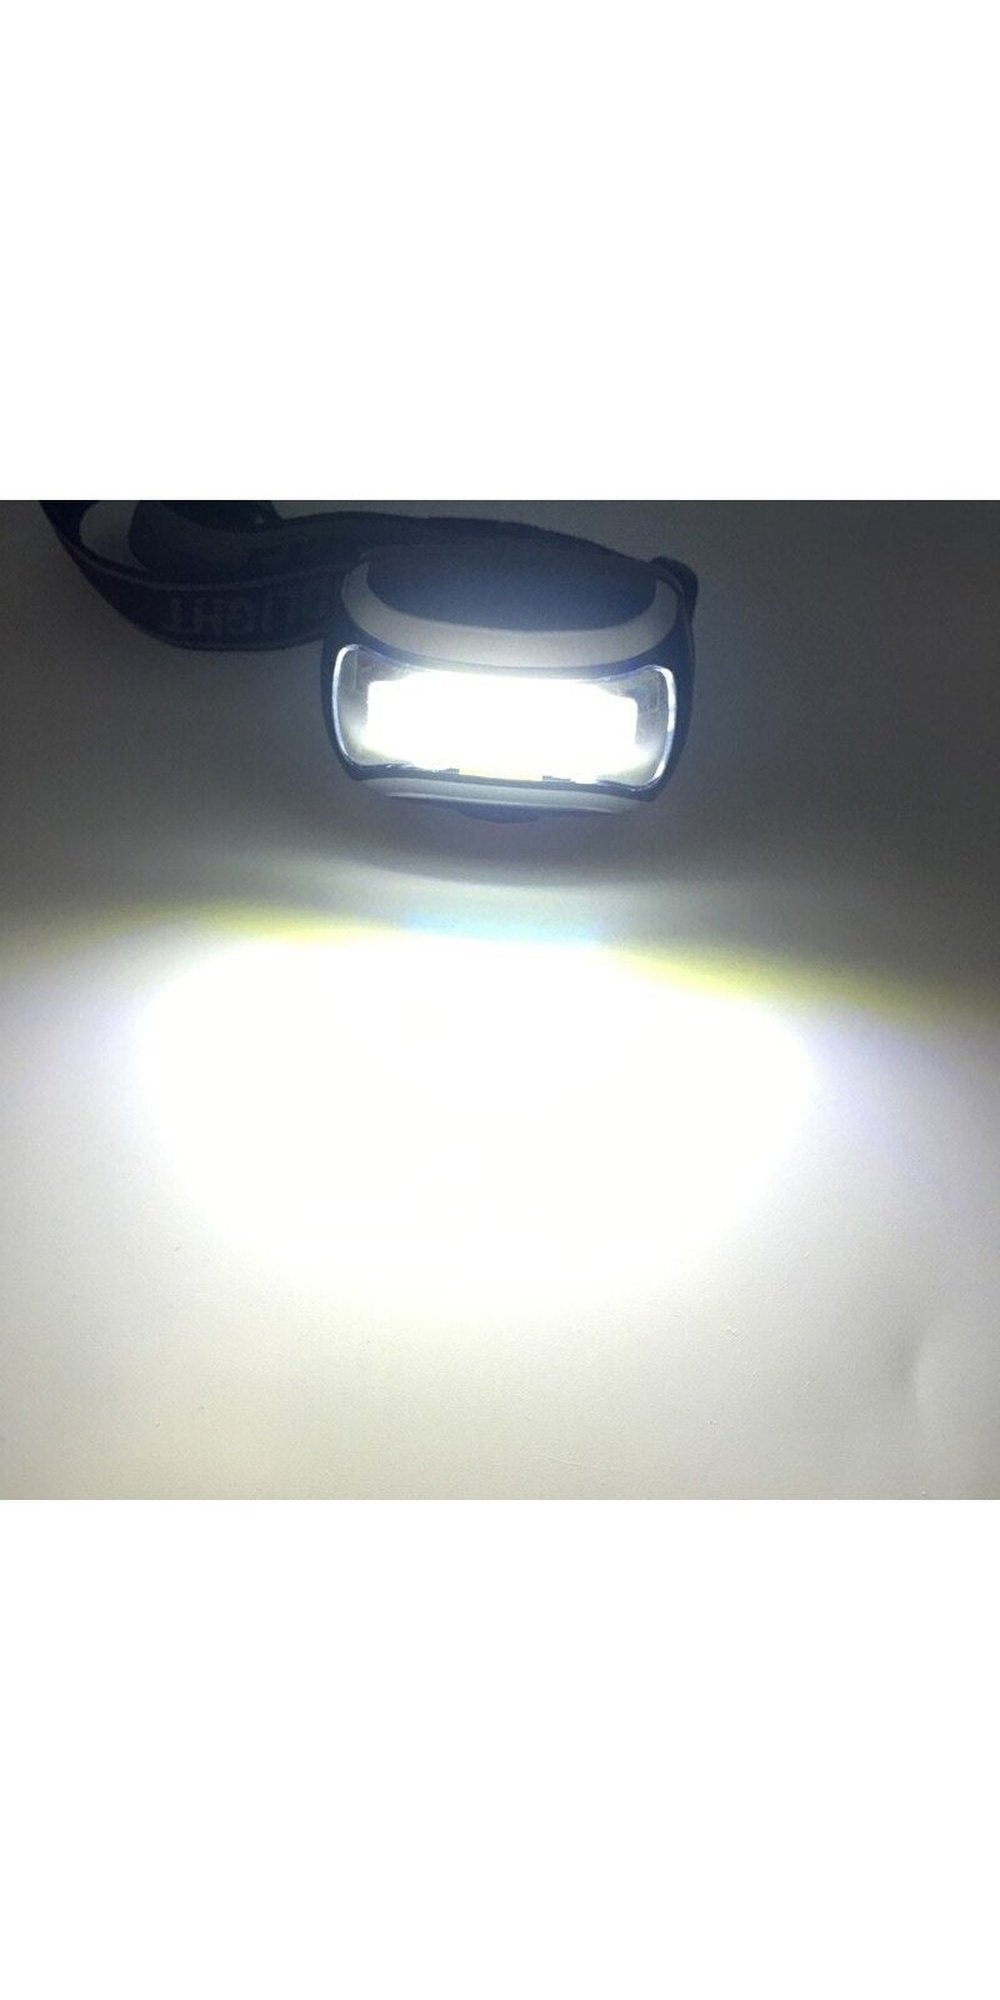 ZK20 LED Headlight Mini Headlamp COB Flashlight Camping Torch Light Dropshipping